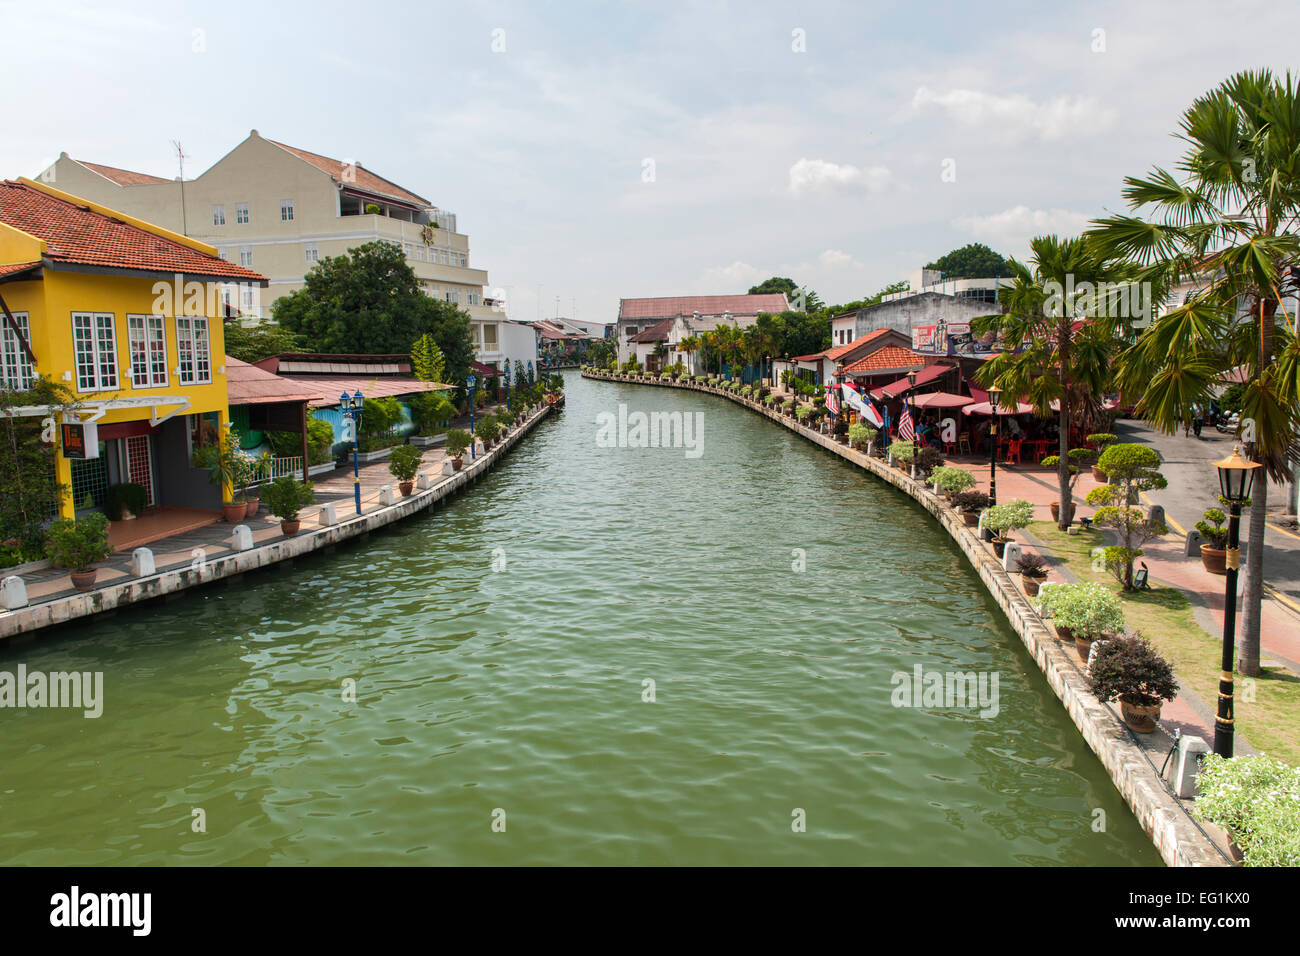 The Malacca River running through Malacca town, Malaysia. Stock Photo